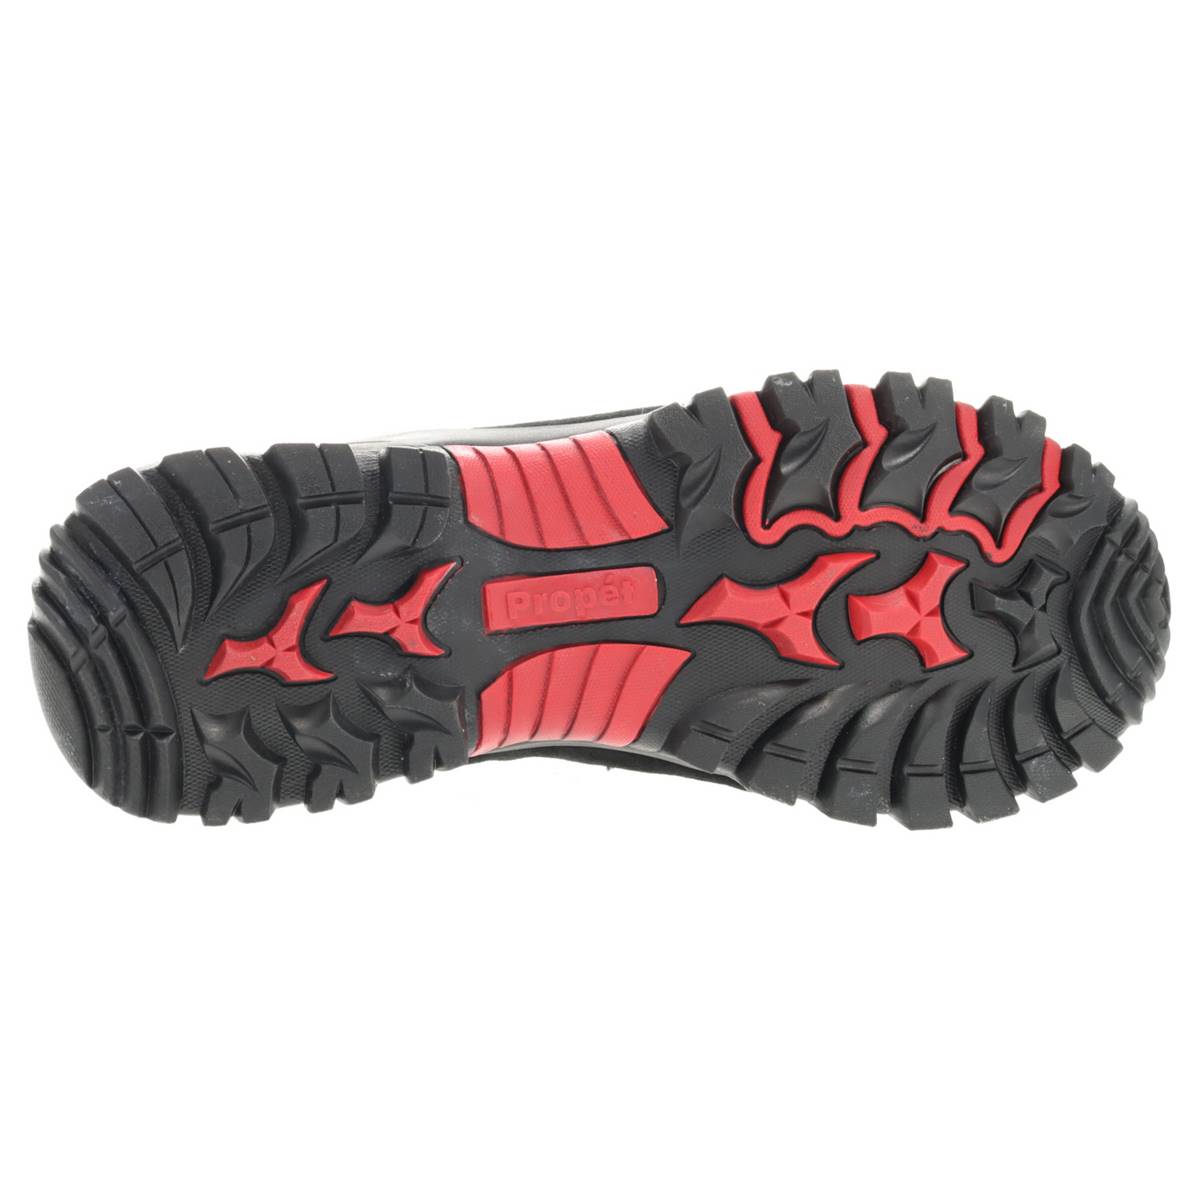 Mens Propet(R) Ridgewalker Low Hiking Shoes